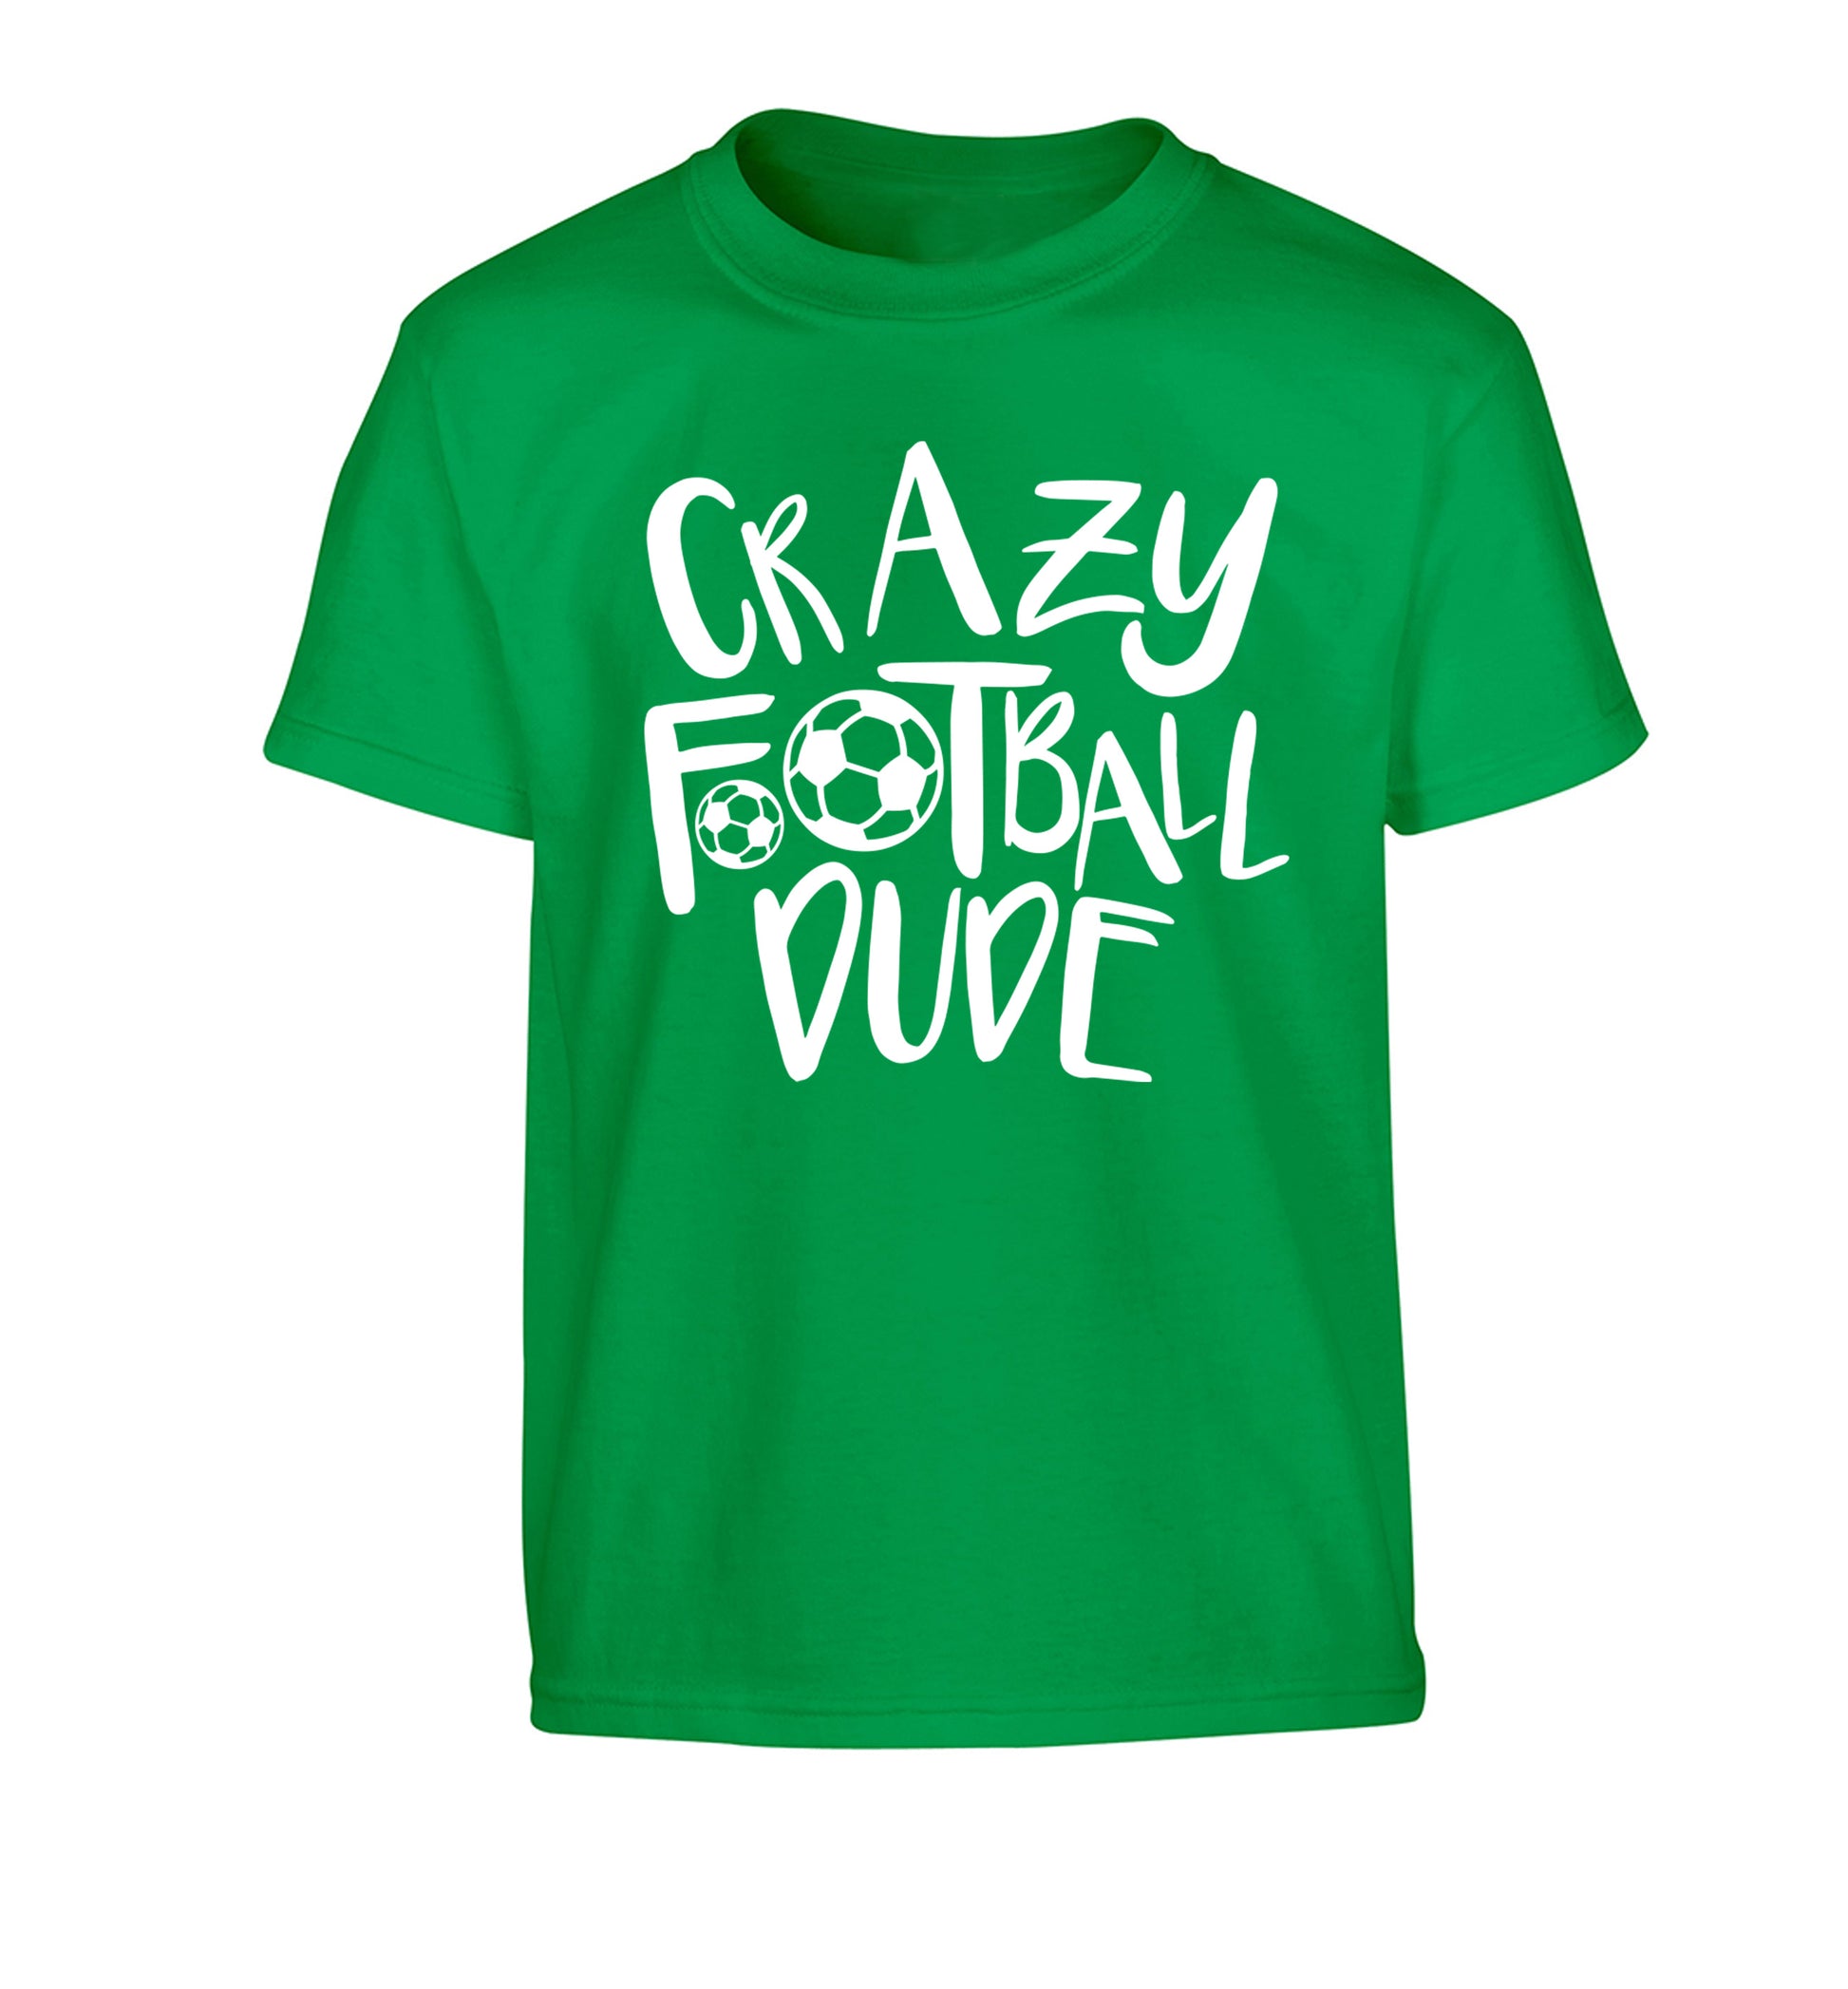 Crazy football dude Children's green Tshirt 12-14 Years